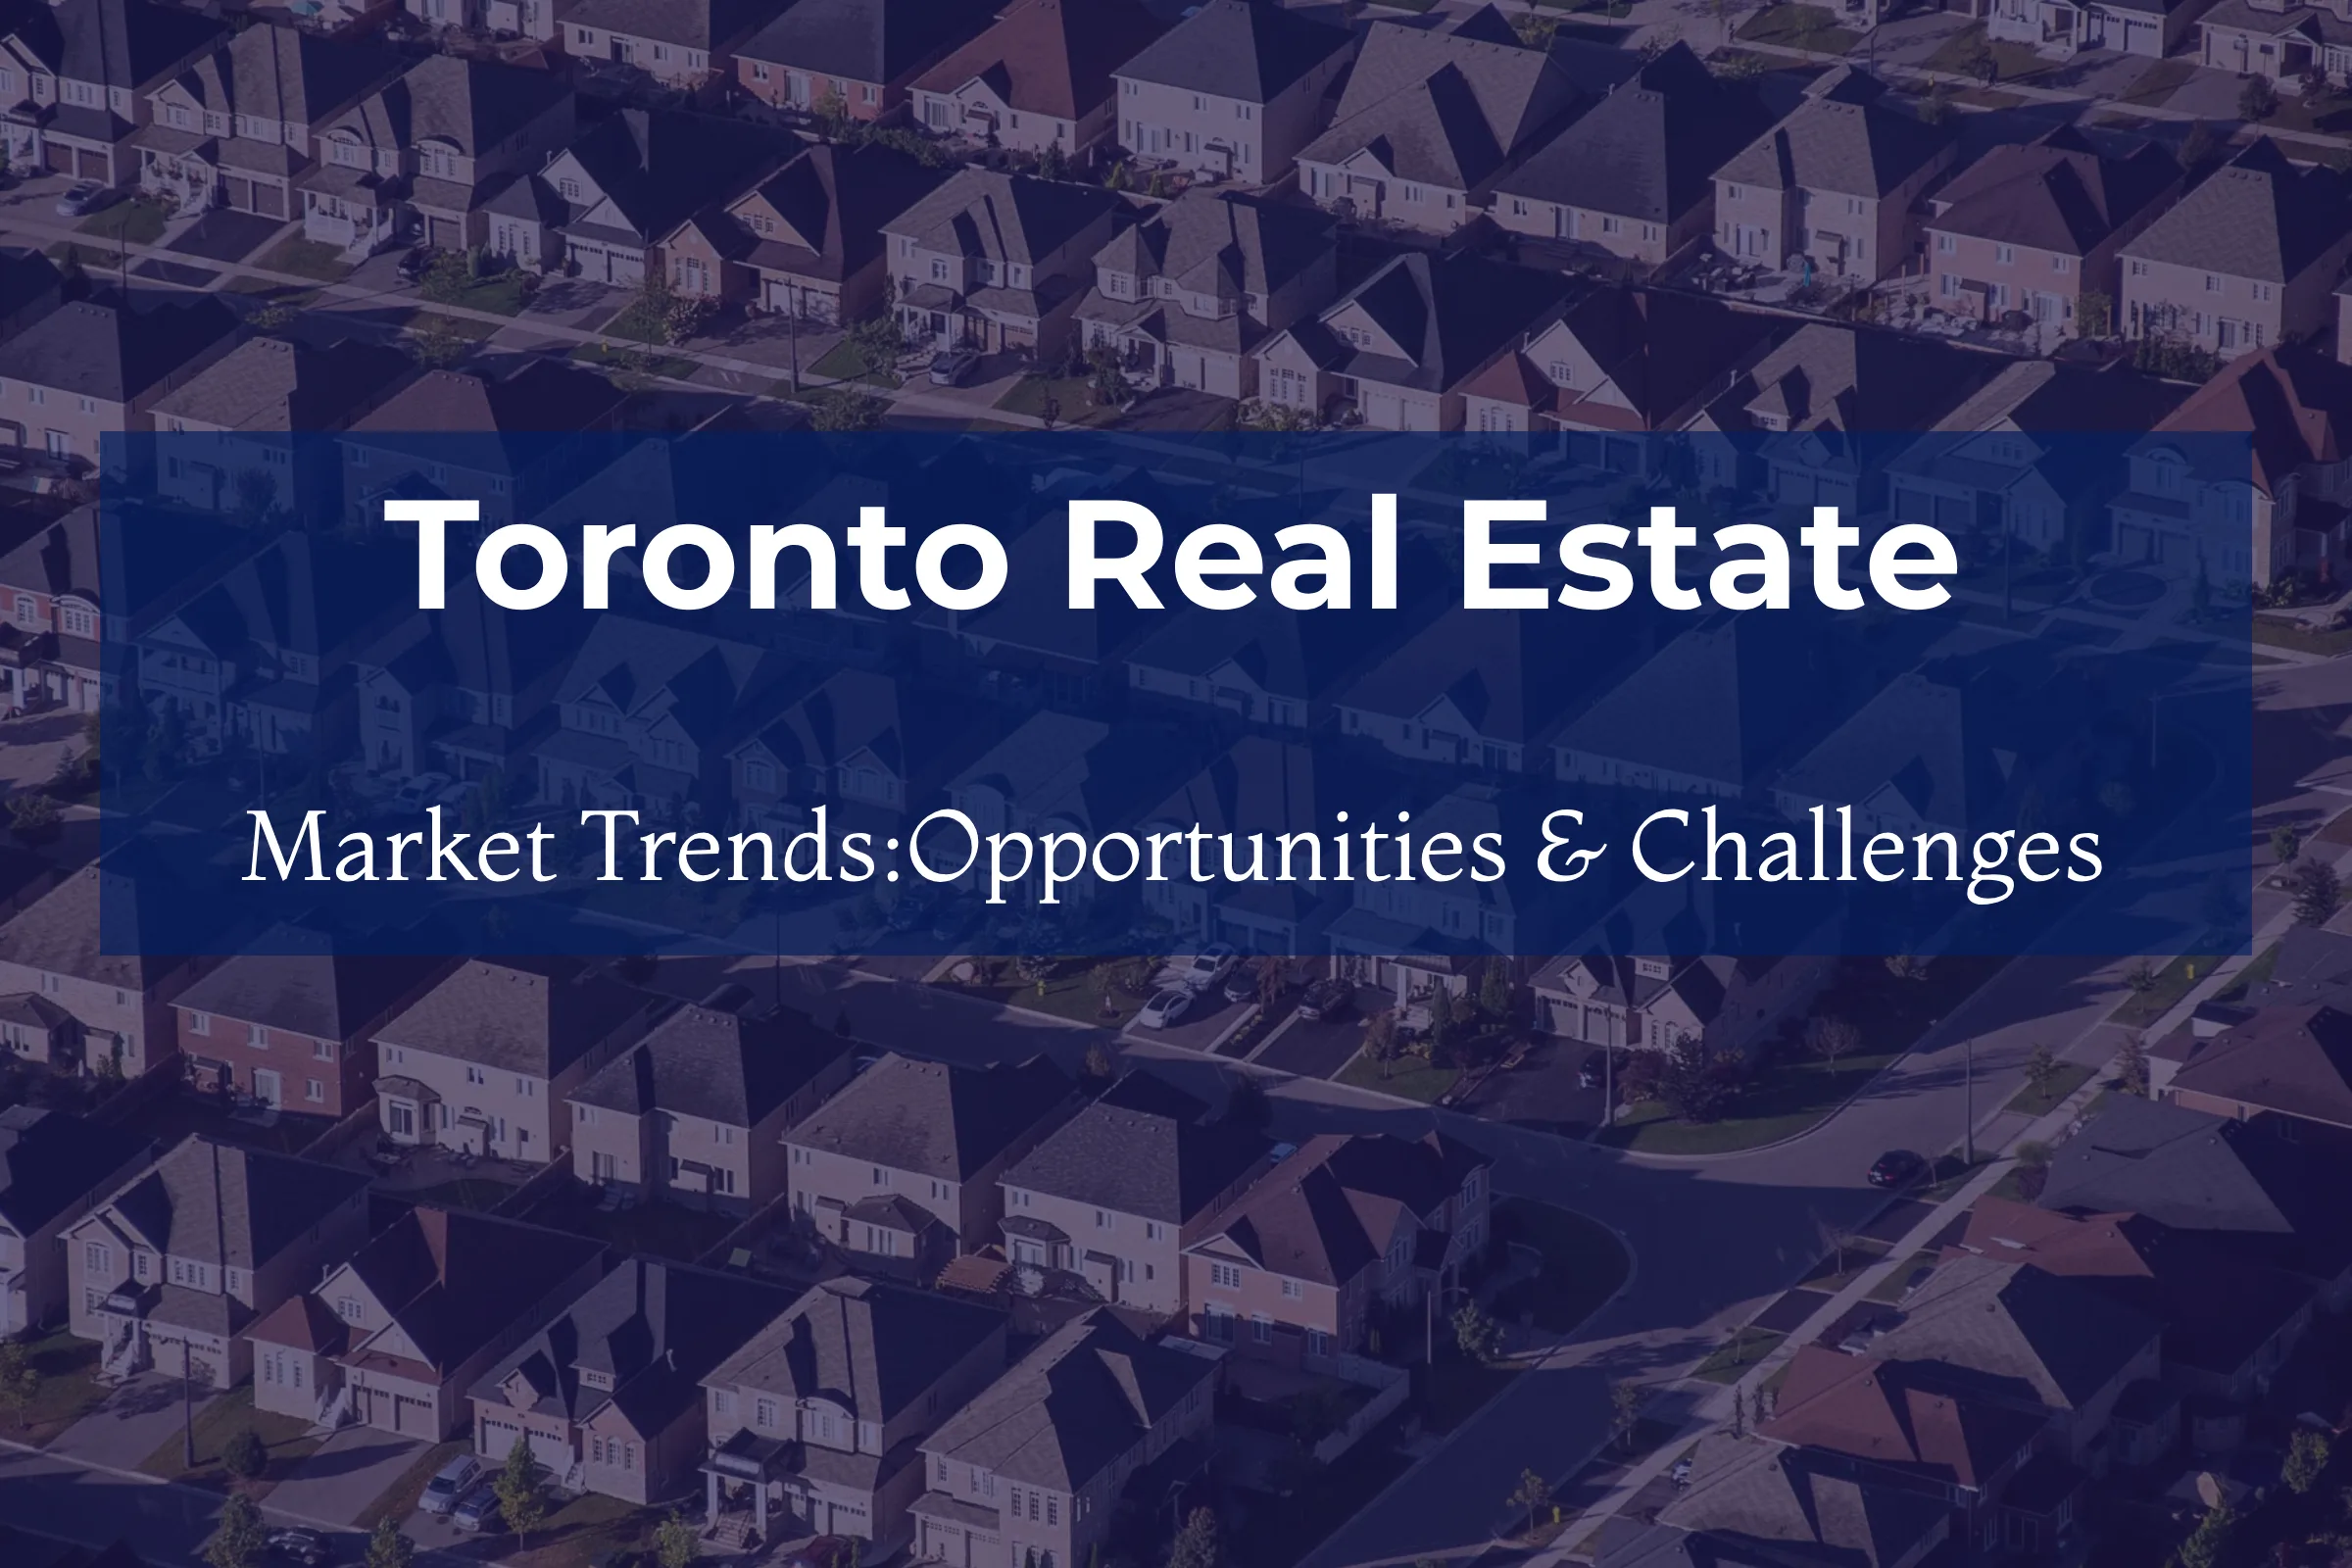 Toronto Real Estate Market Trends:Opportunities & Challenges